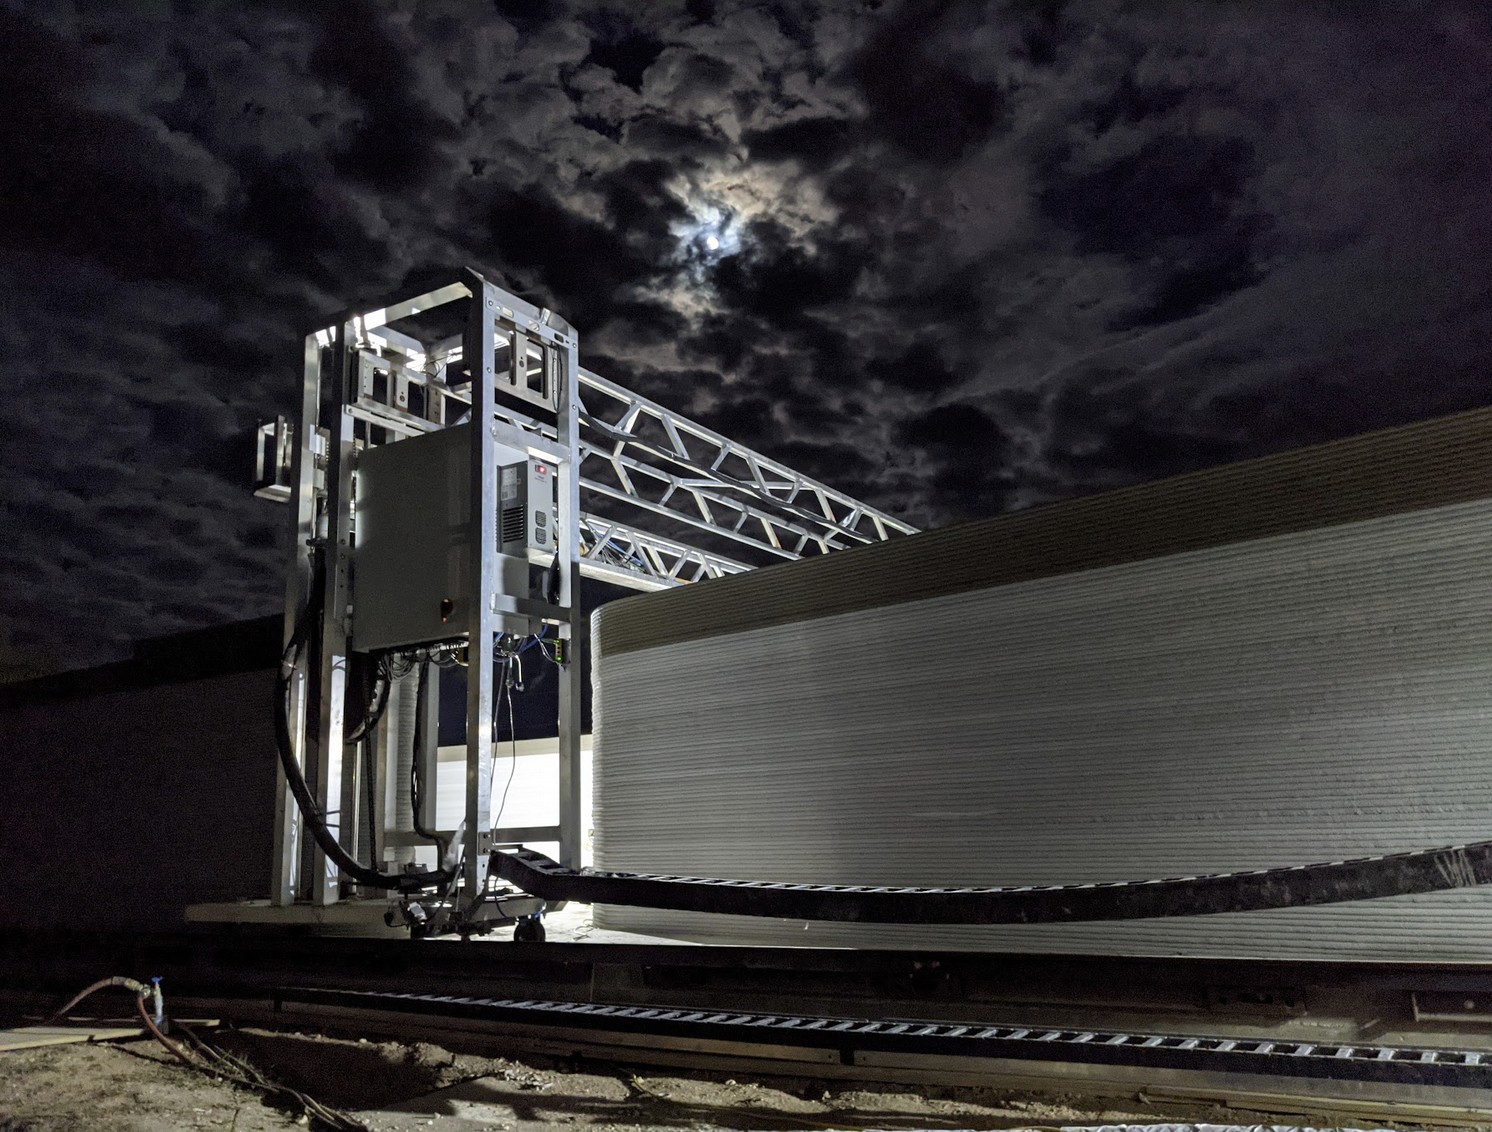 3D printing the military barracks at night